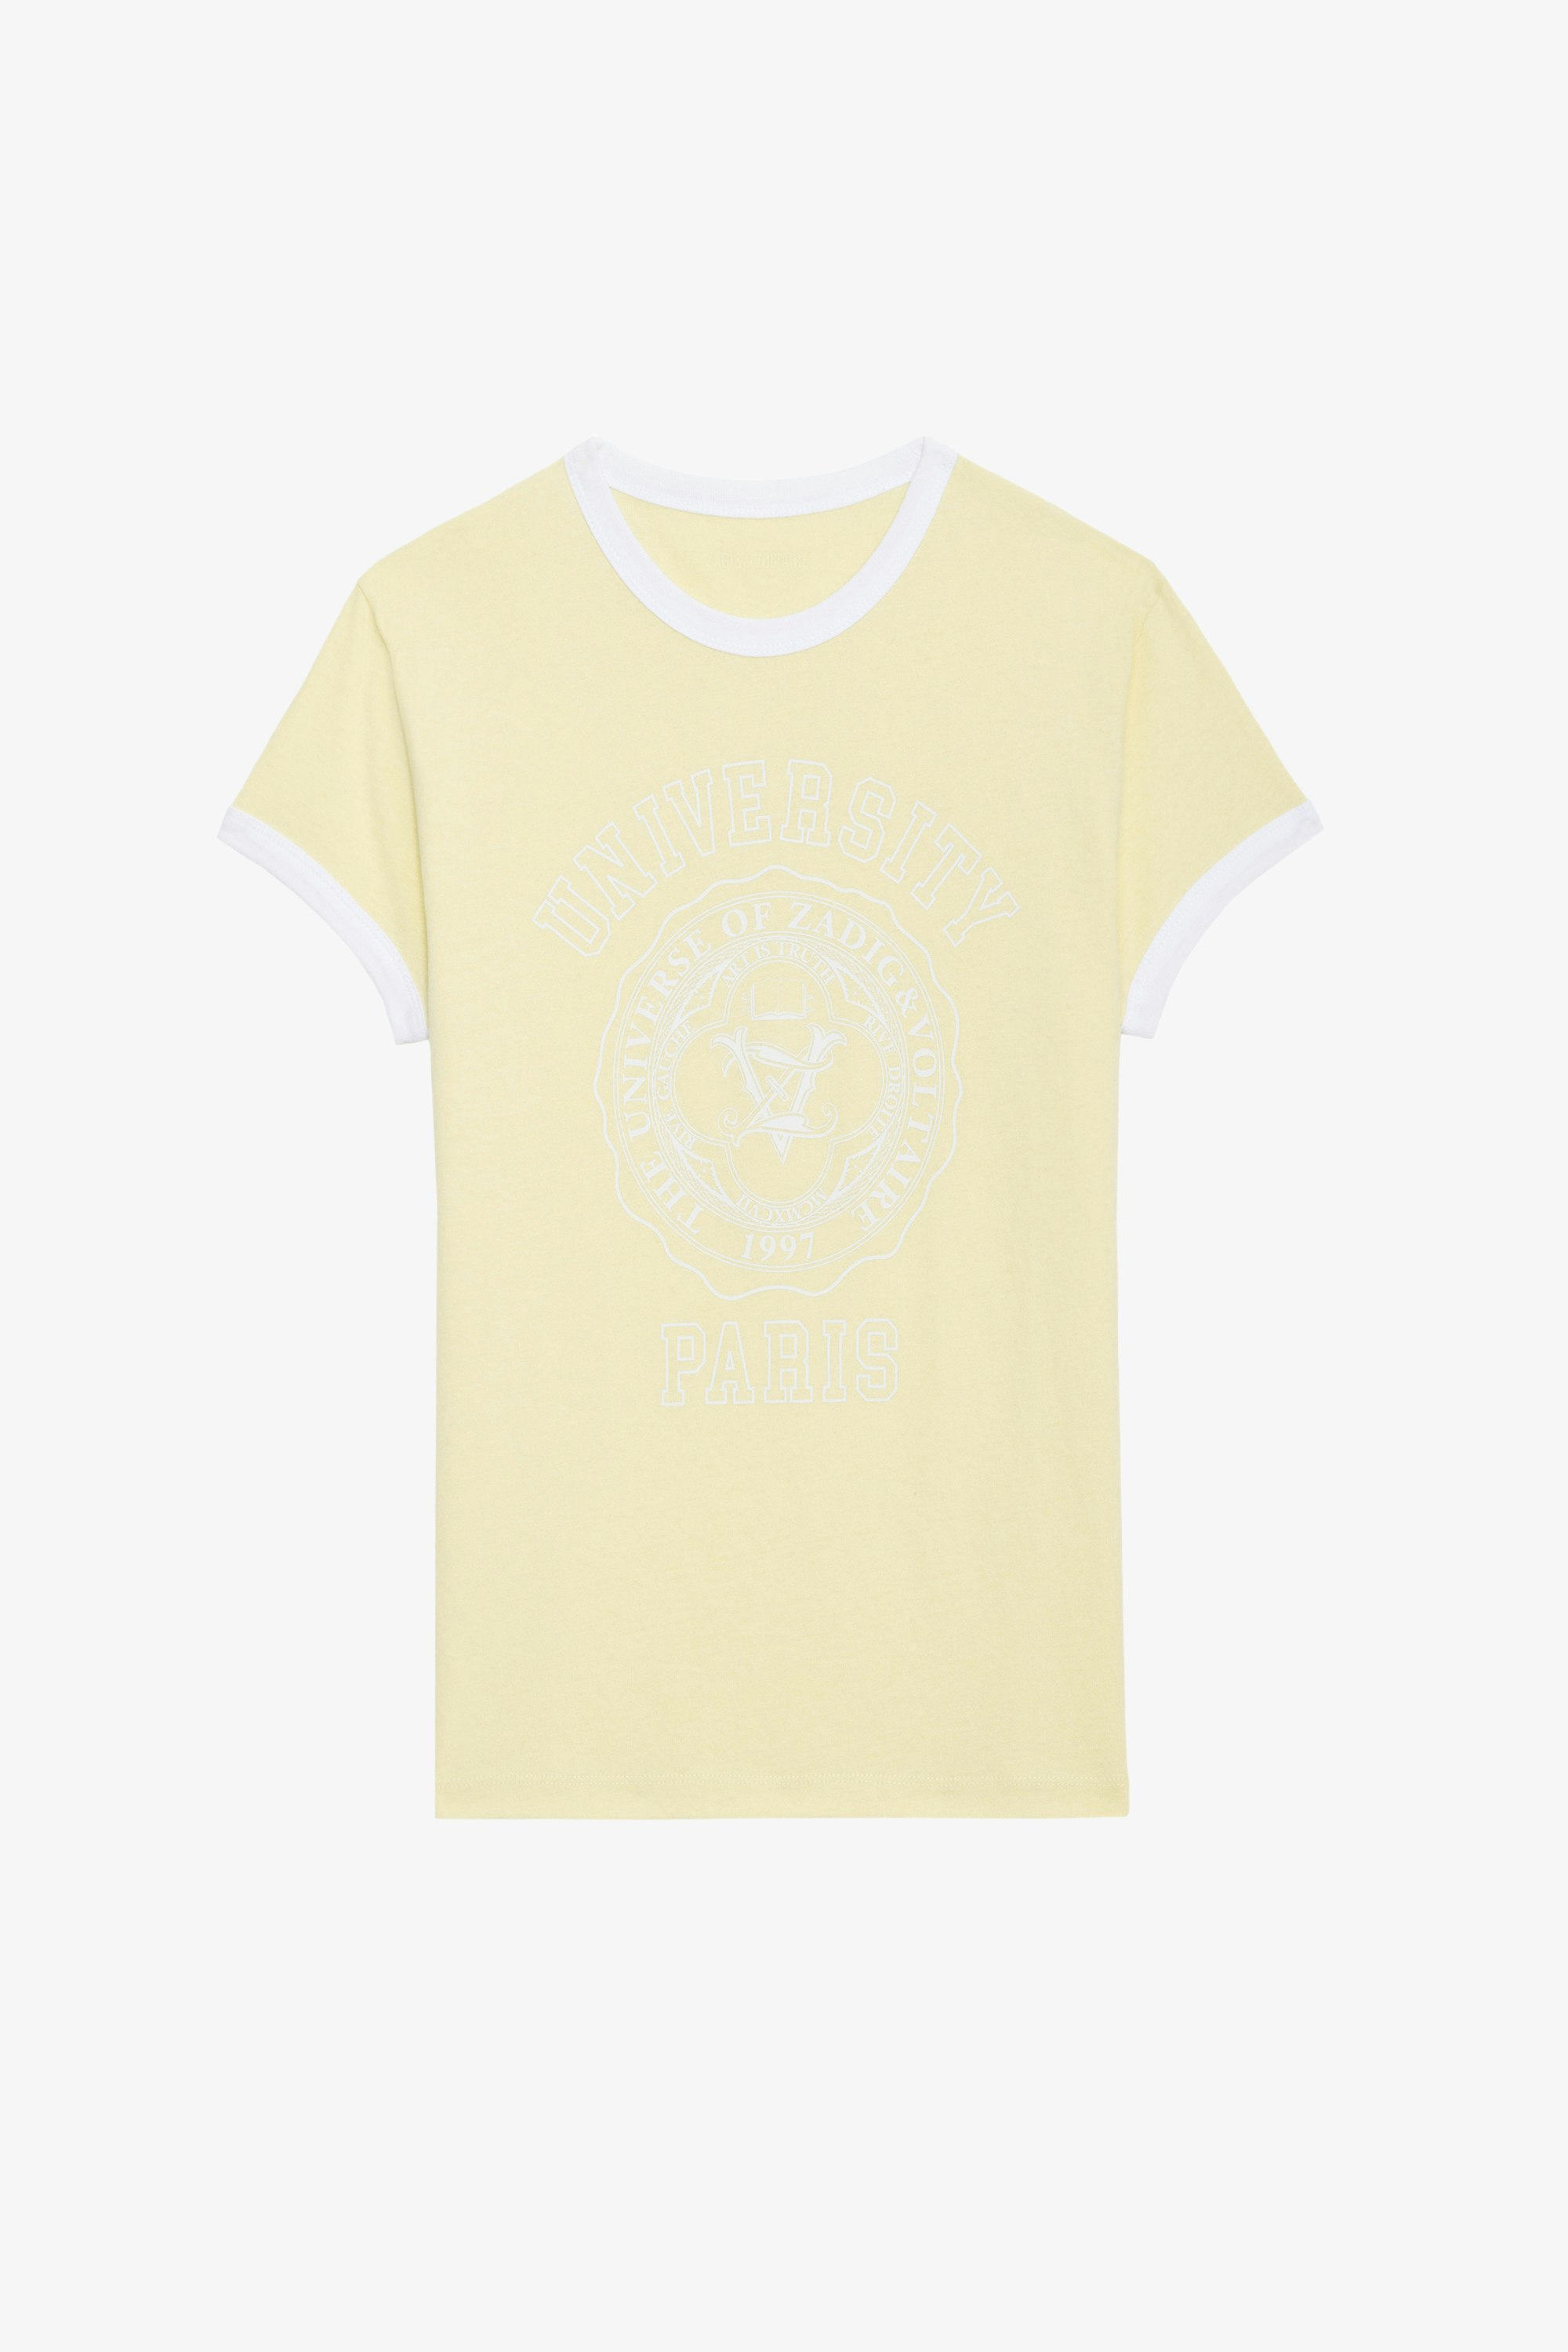 Walk University T-shirt - Light yellow cotton T-shirt with short sleeves, University motif and contrasting trim.